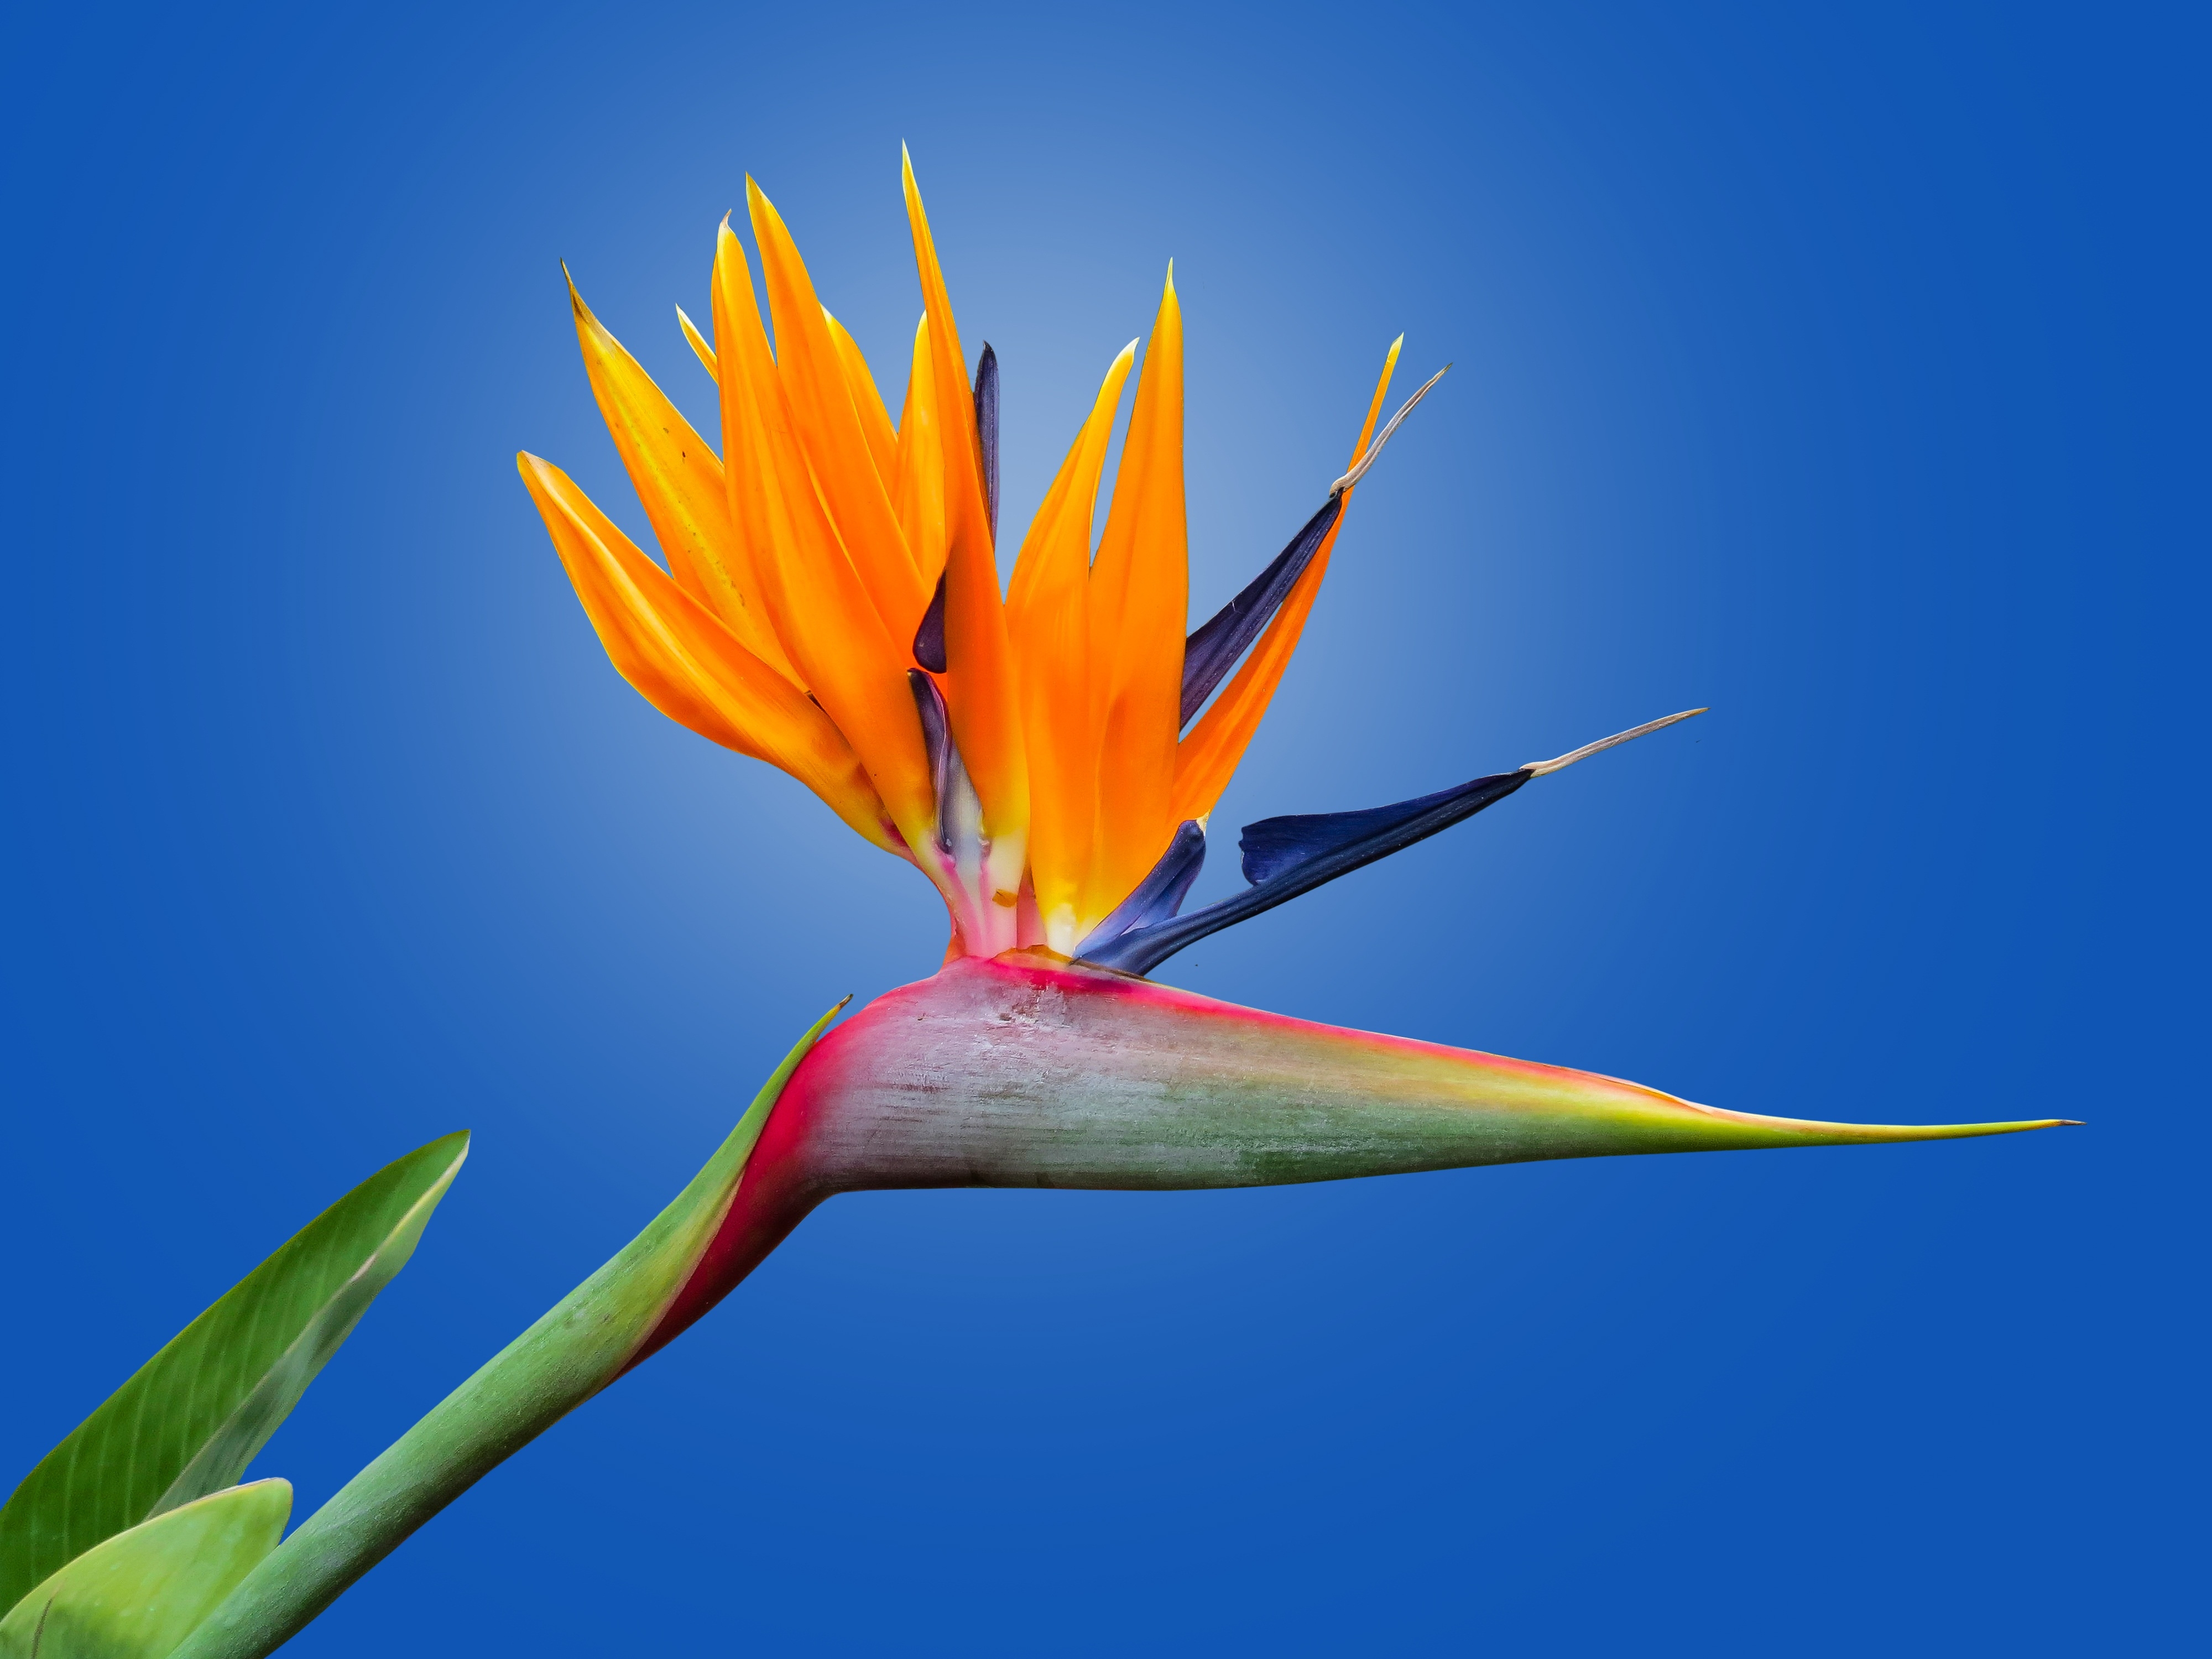 HD wallpaper, Crane Flower, Beautiful, Orange Flower, Blue Background, Bird Of Paradise Flower, Strelitzia, Petals